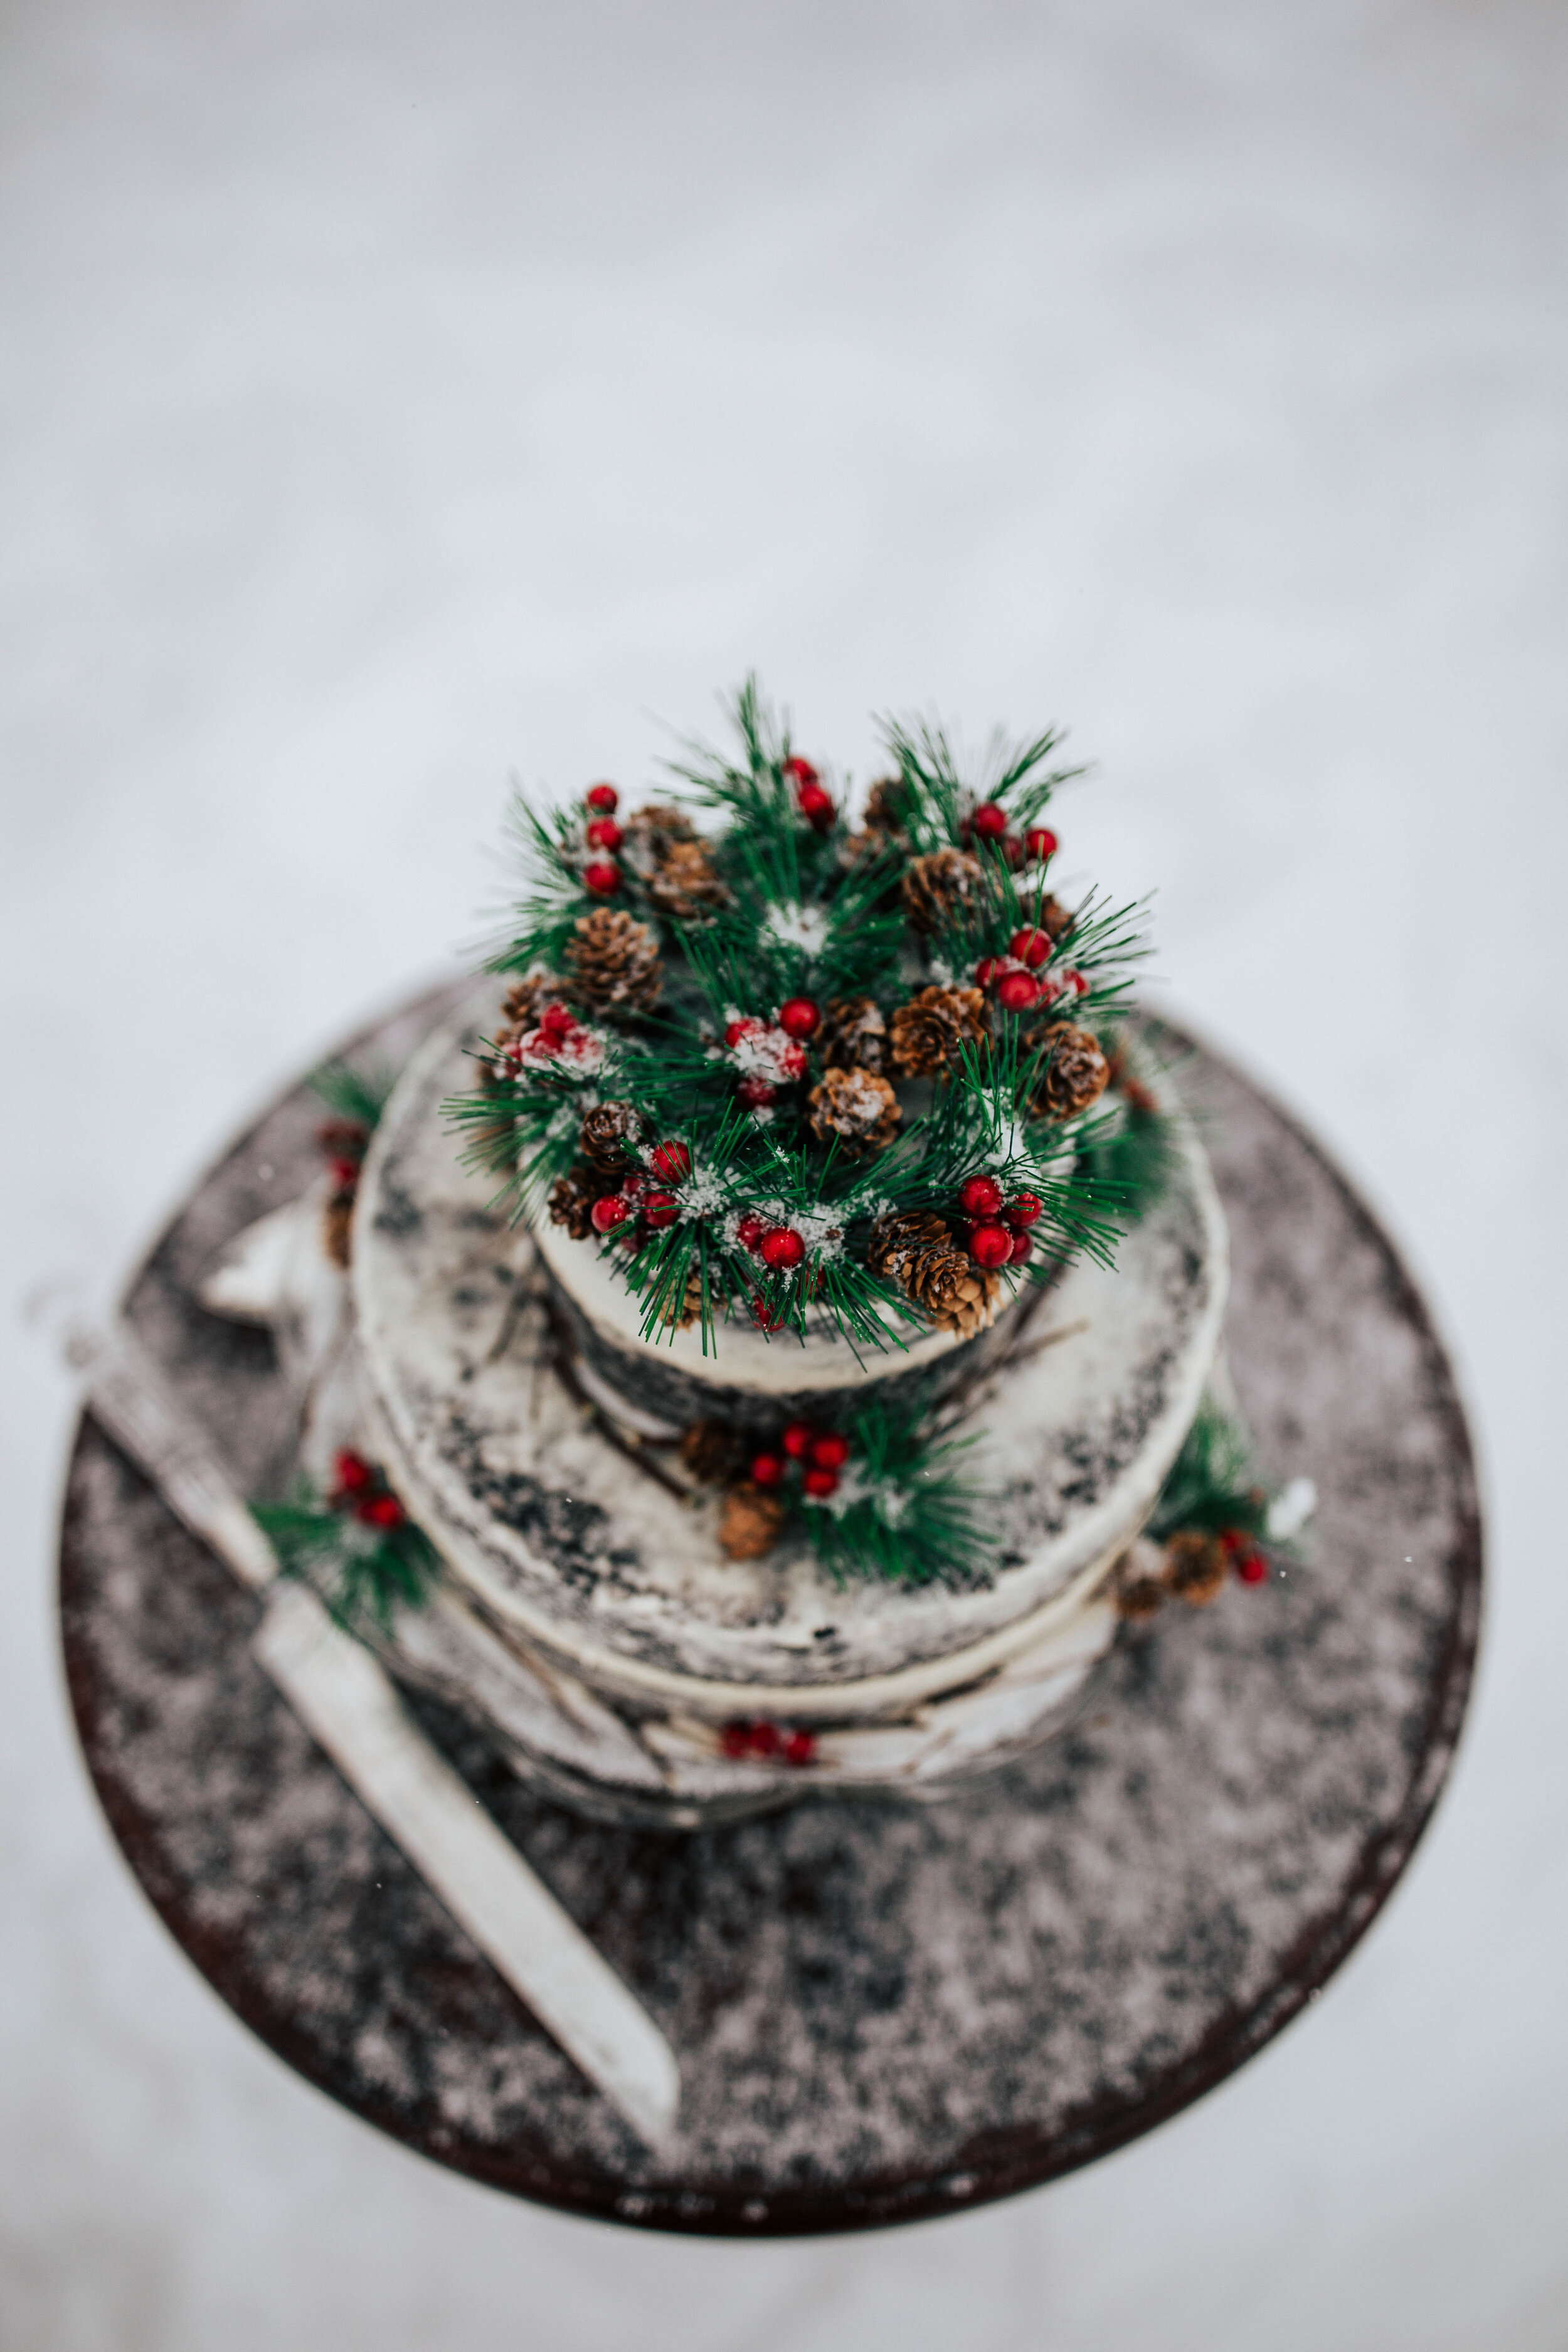 Chocolate wedding cake white vanilla frosting pine cones green holly berries snowy cake cutting table winter #weddingcake #cake #weddingphotographer #chocolatecake #cakevendor